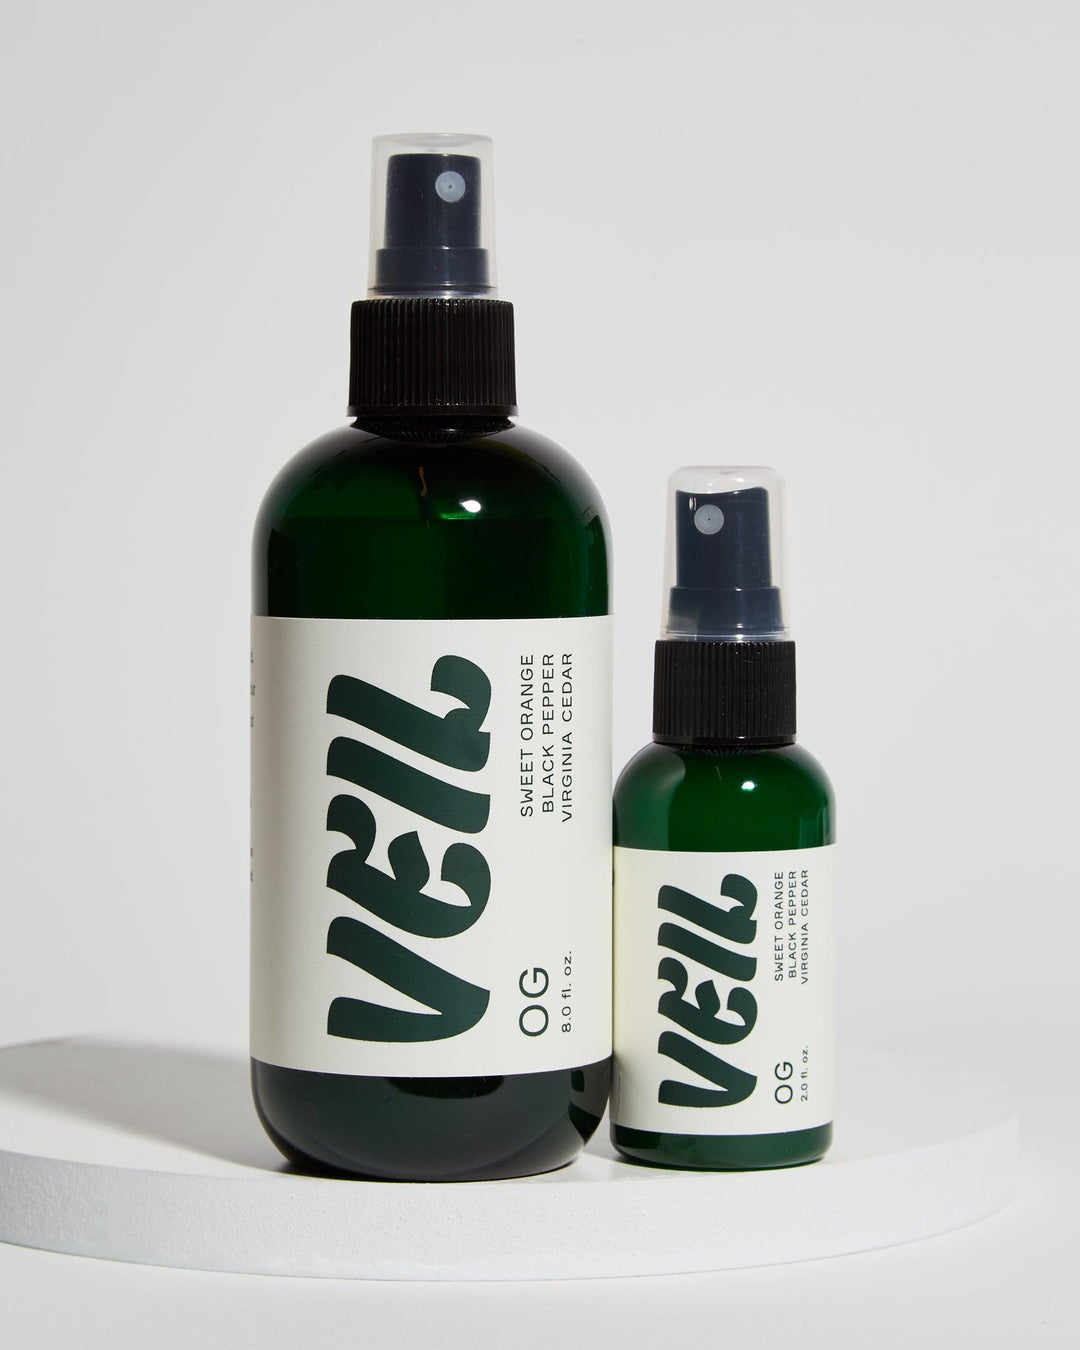 veil odor eliminator spray bottle sizes